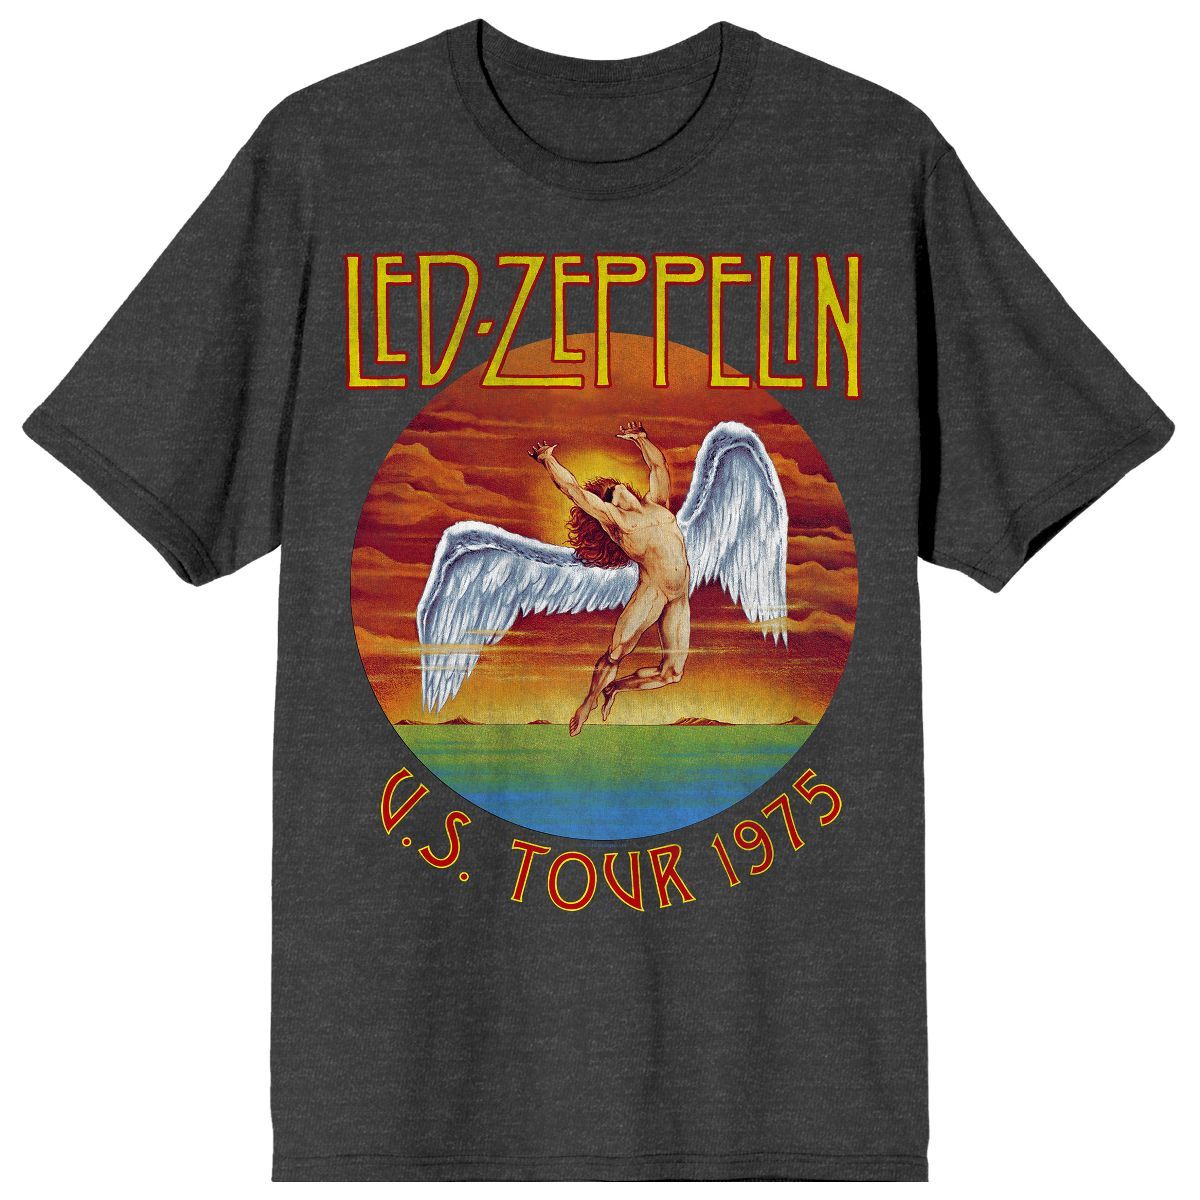 Led Zeppelin U.S. Tour 1975 Crew Neck Short Sleeve Charcoal Heather Men’s T-shirt | Target